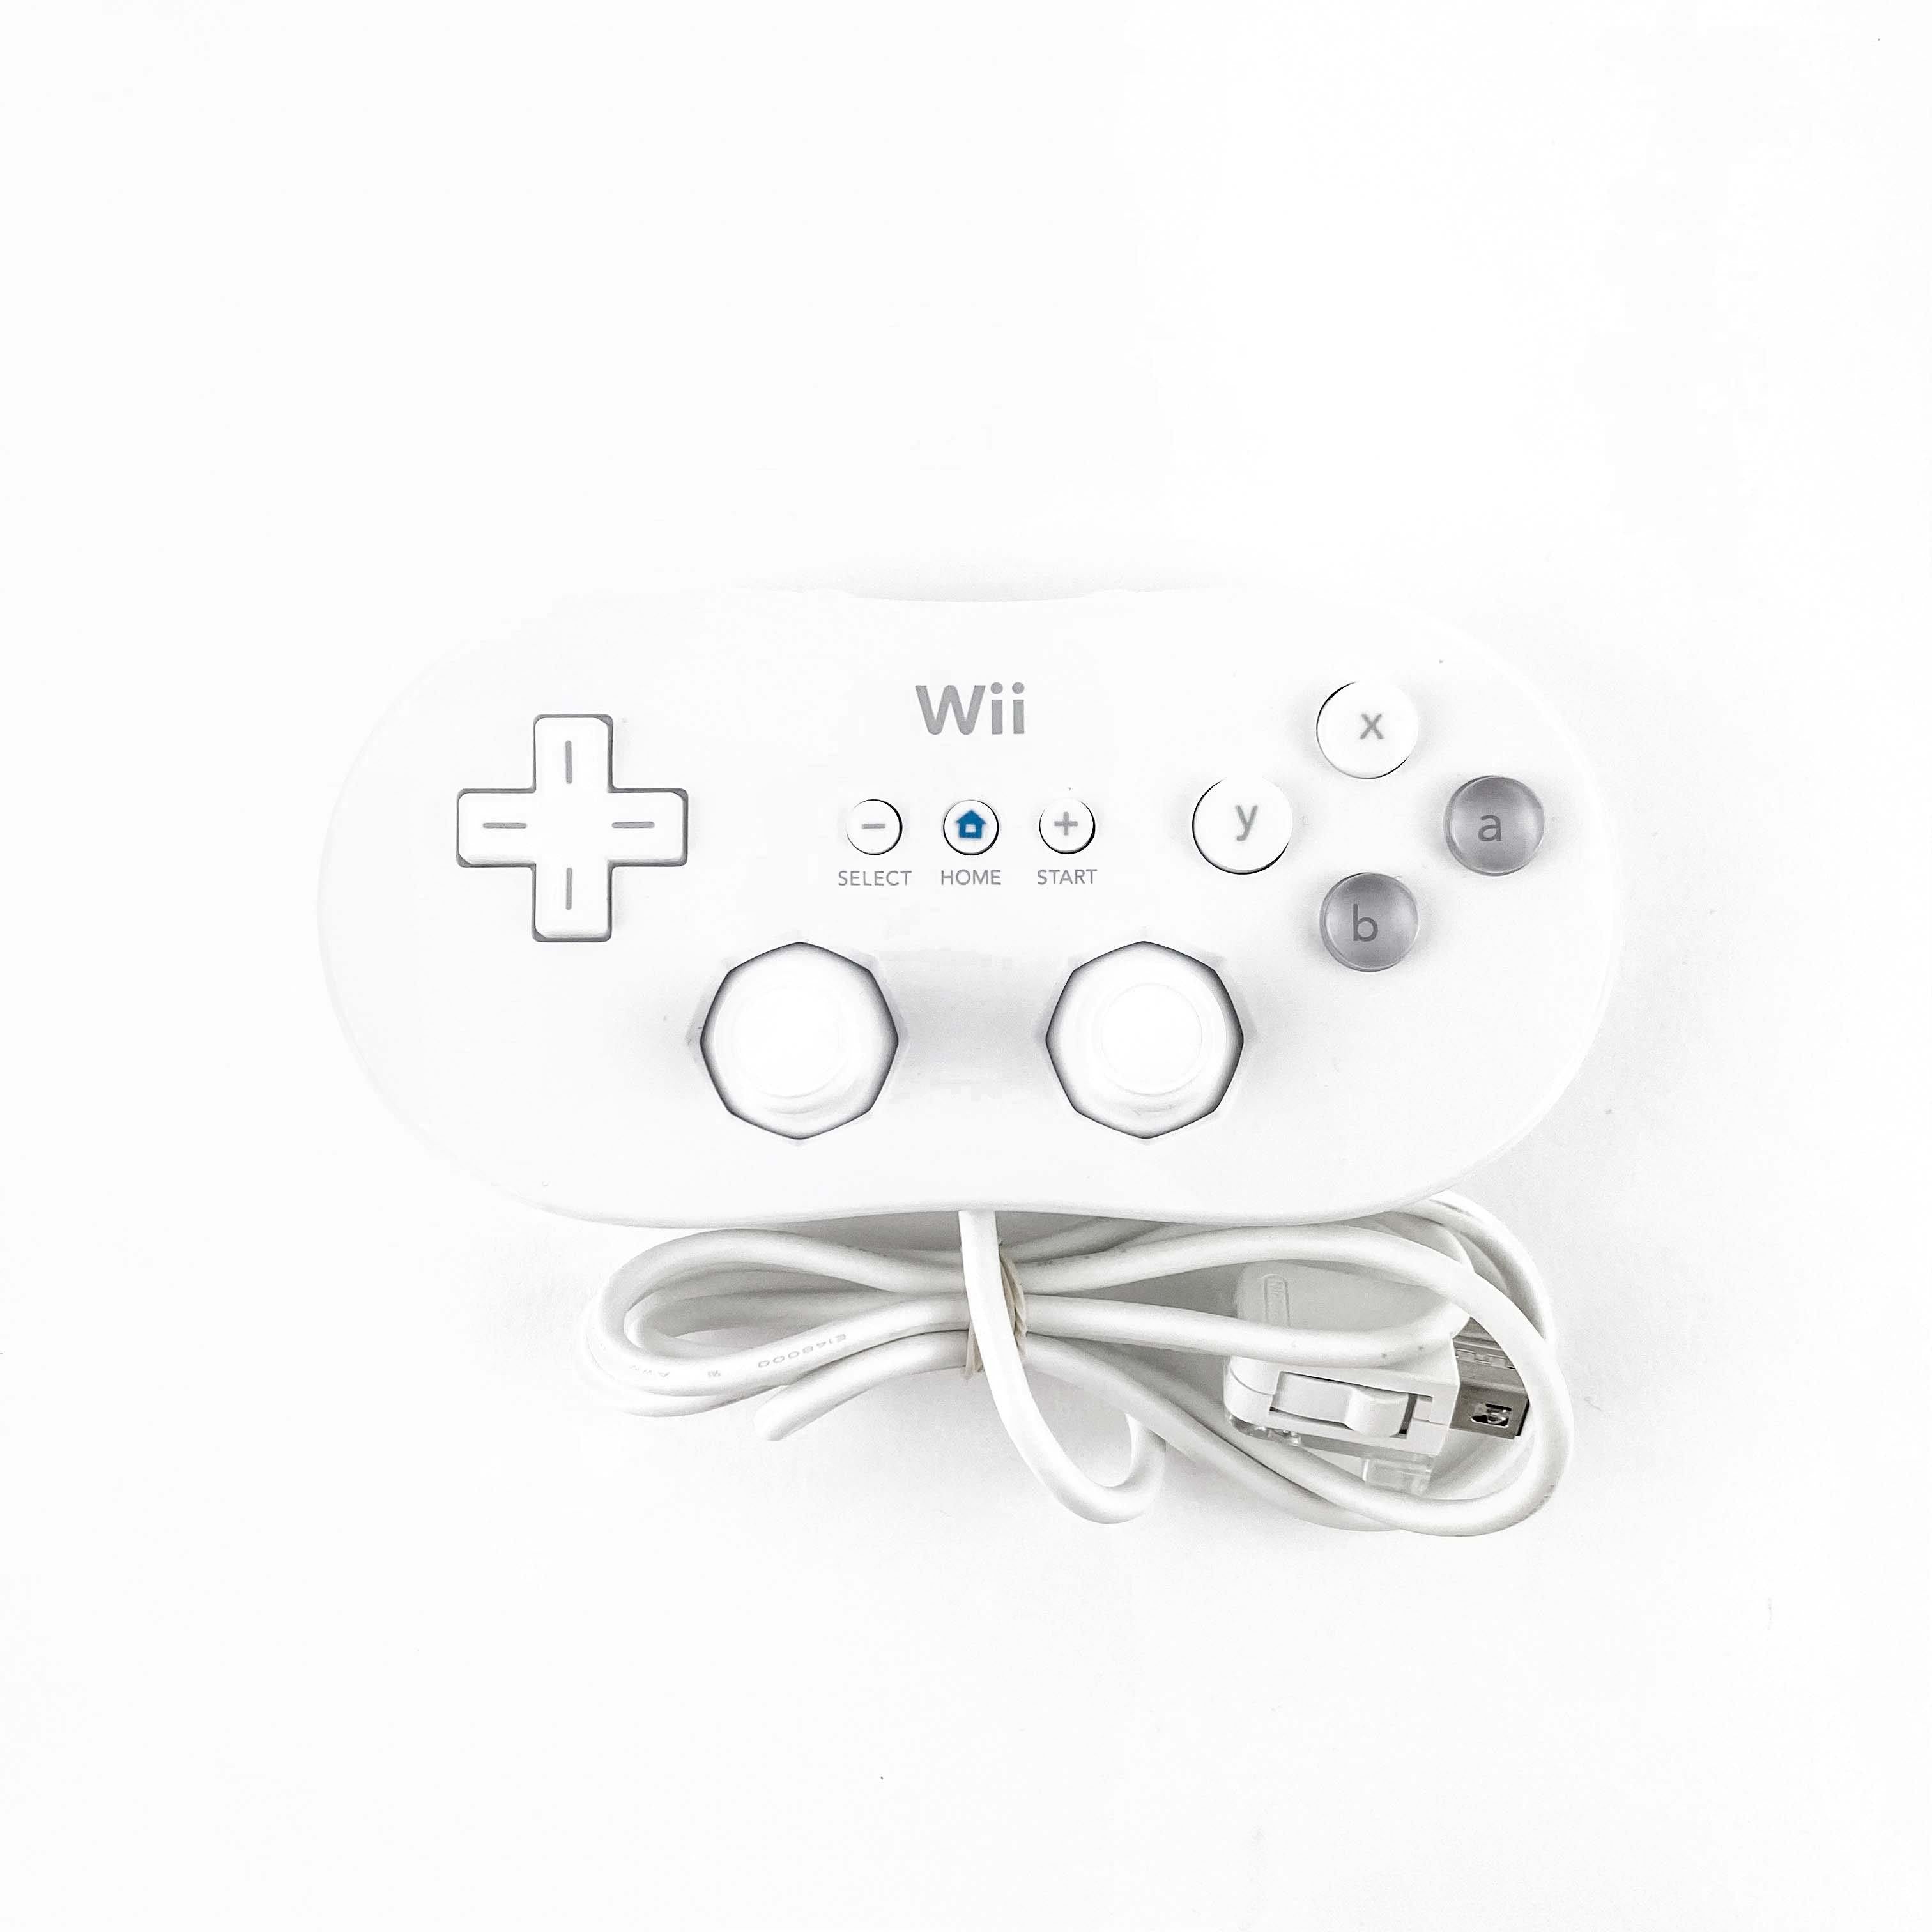 Nintendo Wii Classic Controller White (RVL-005)